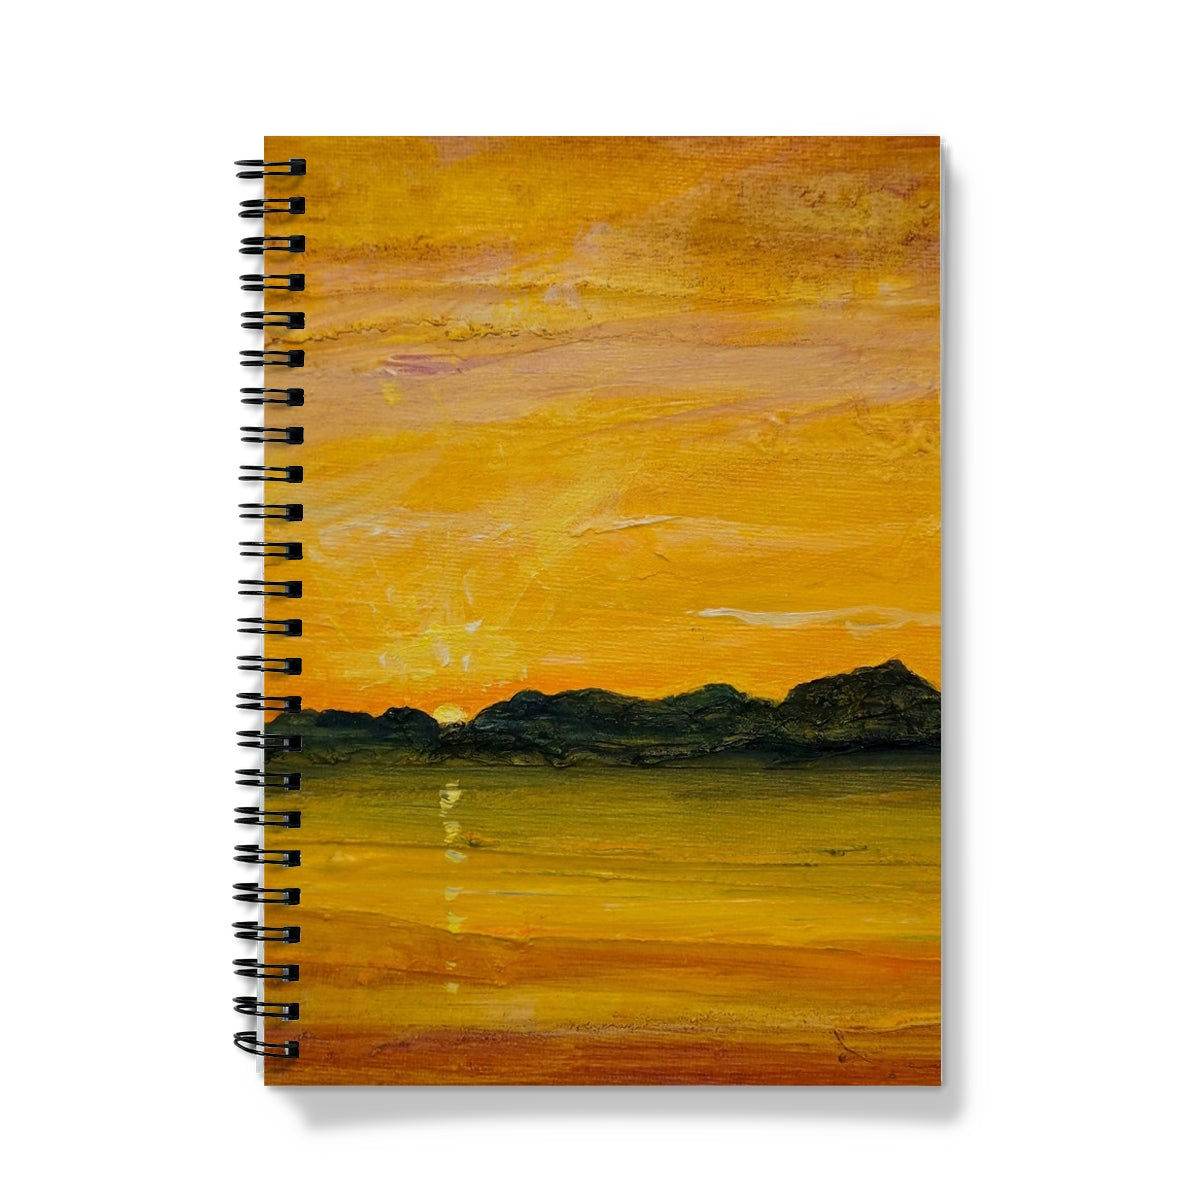 Jura Sunset Art Gifts Notebook-Journals & Notebooks-Hebridean Islands Art Gallery-A5-Lined-Paintings, Prints, Homeware, Art Gifts From Scotland By Scottish Artist Kevin Hunter